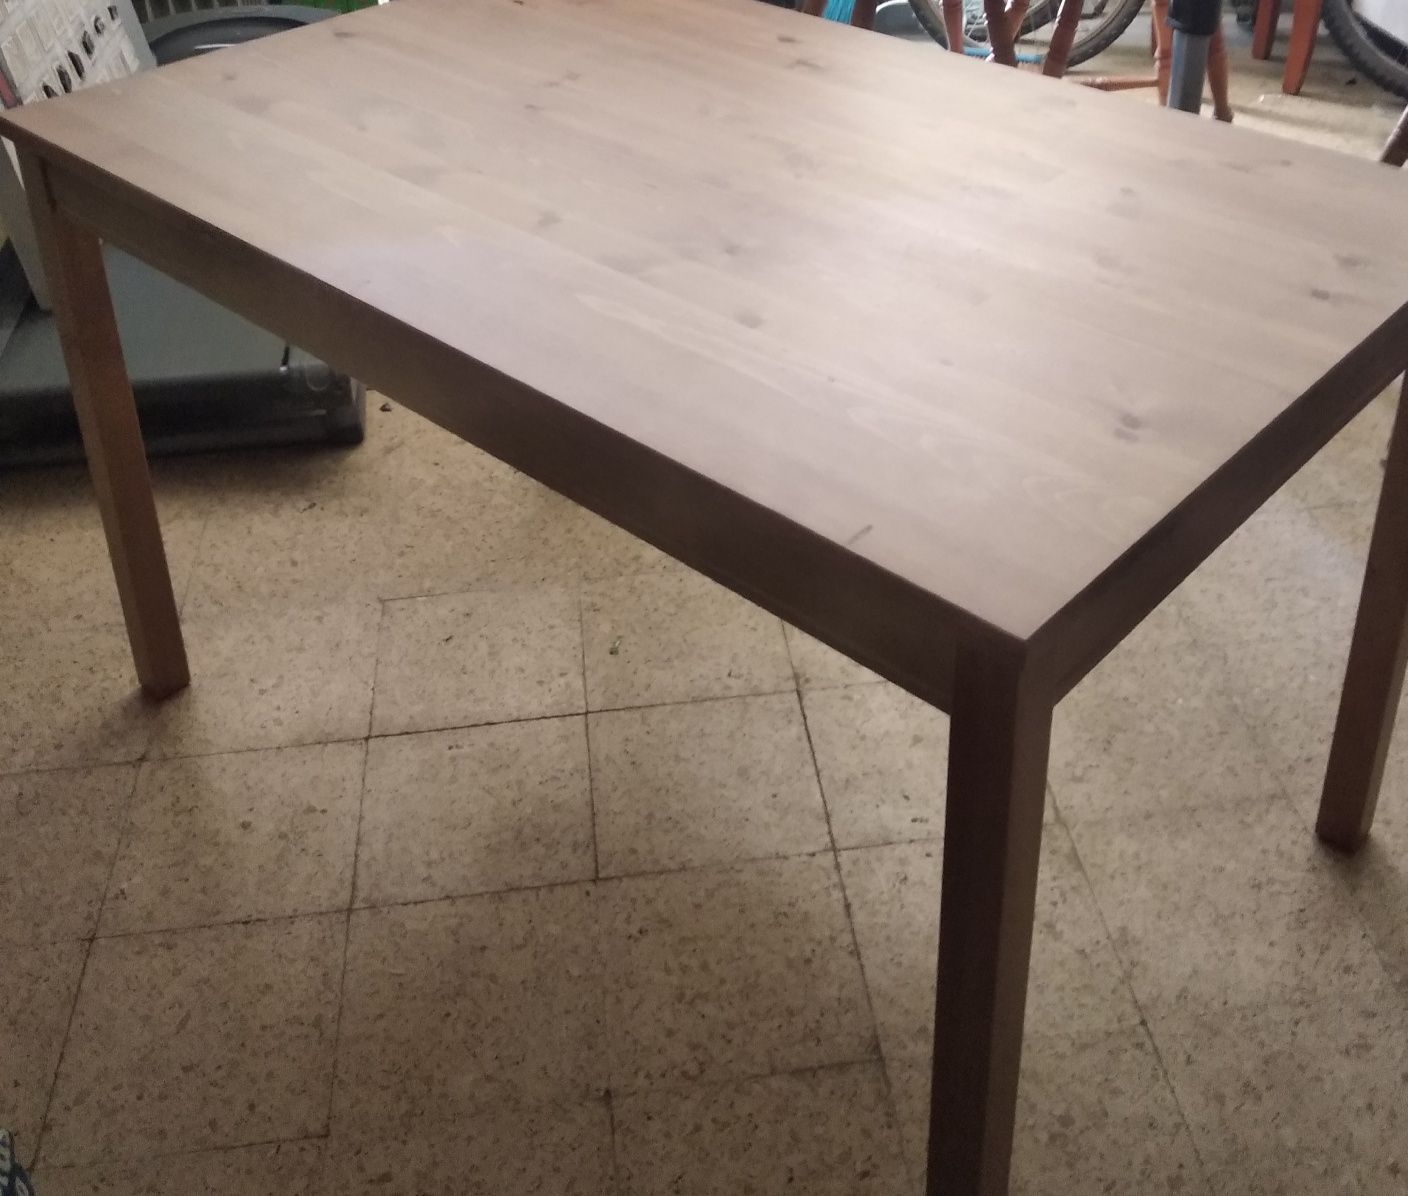 Mesa de cozinha IKEA